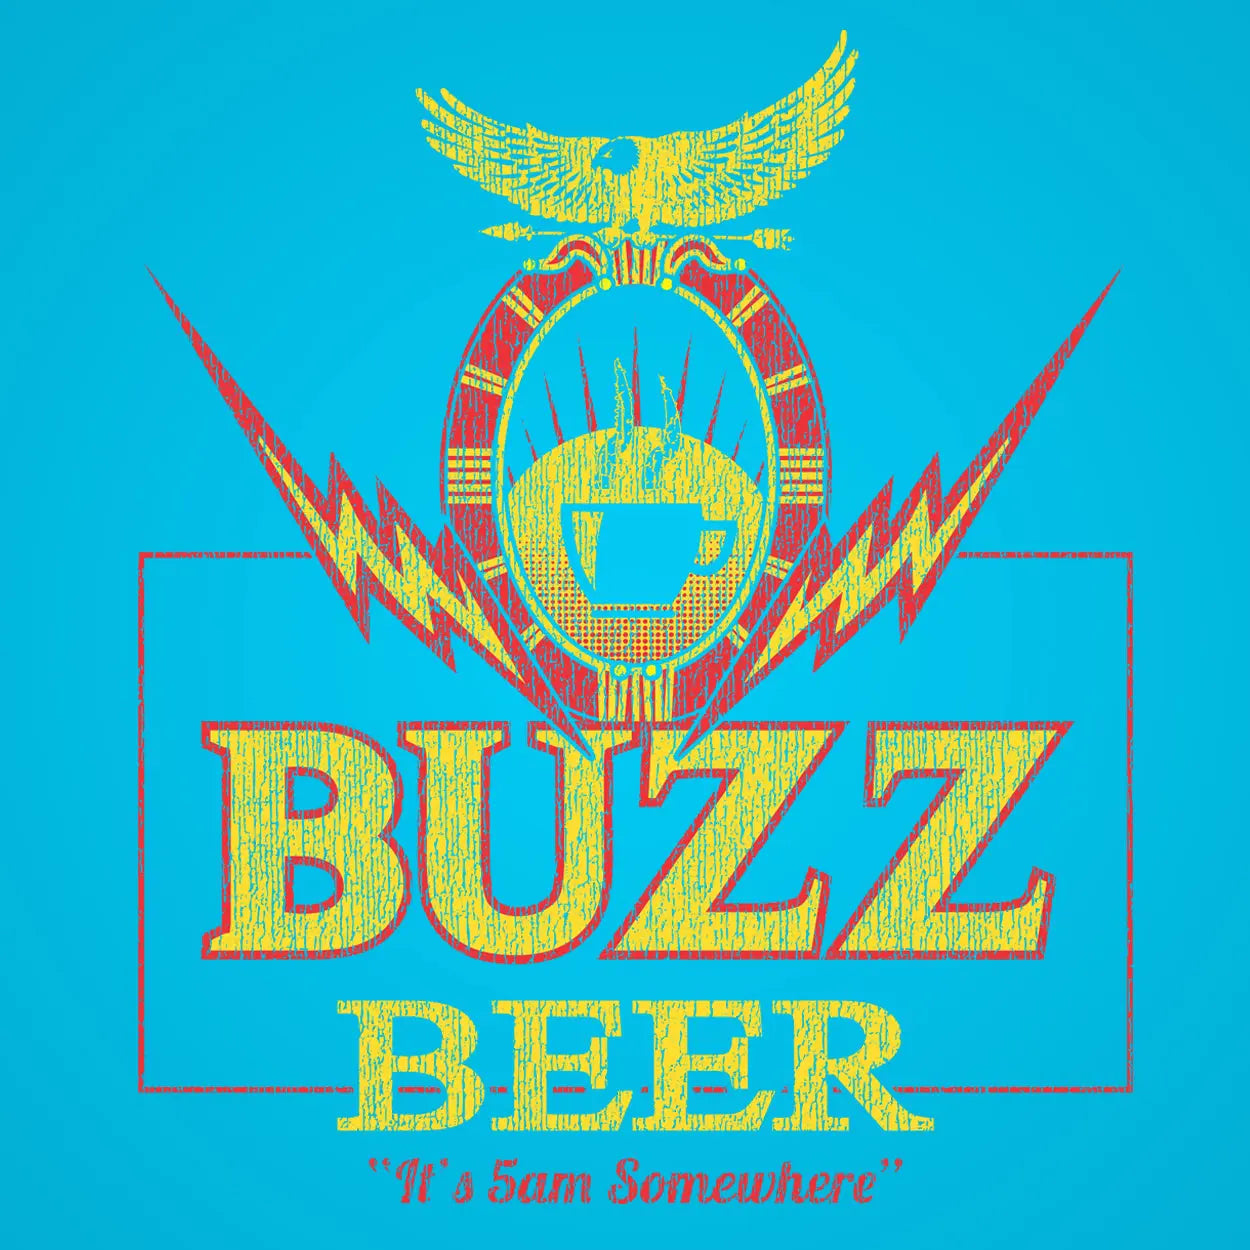 Buzz Beer Cleveland Tshirt - Donkey Tees